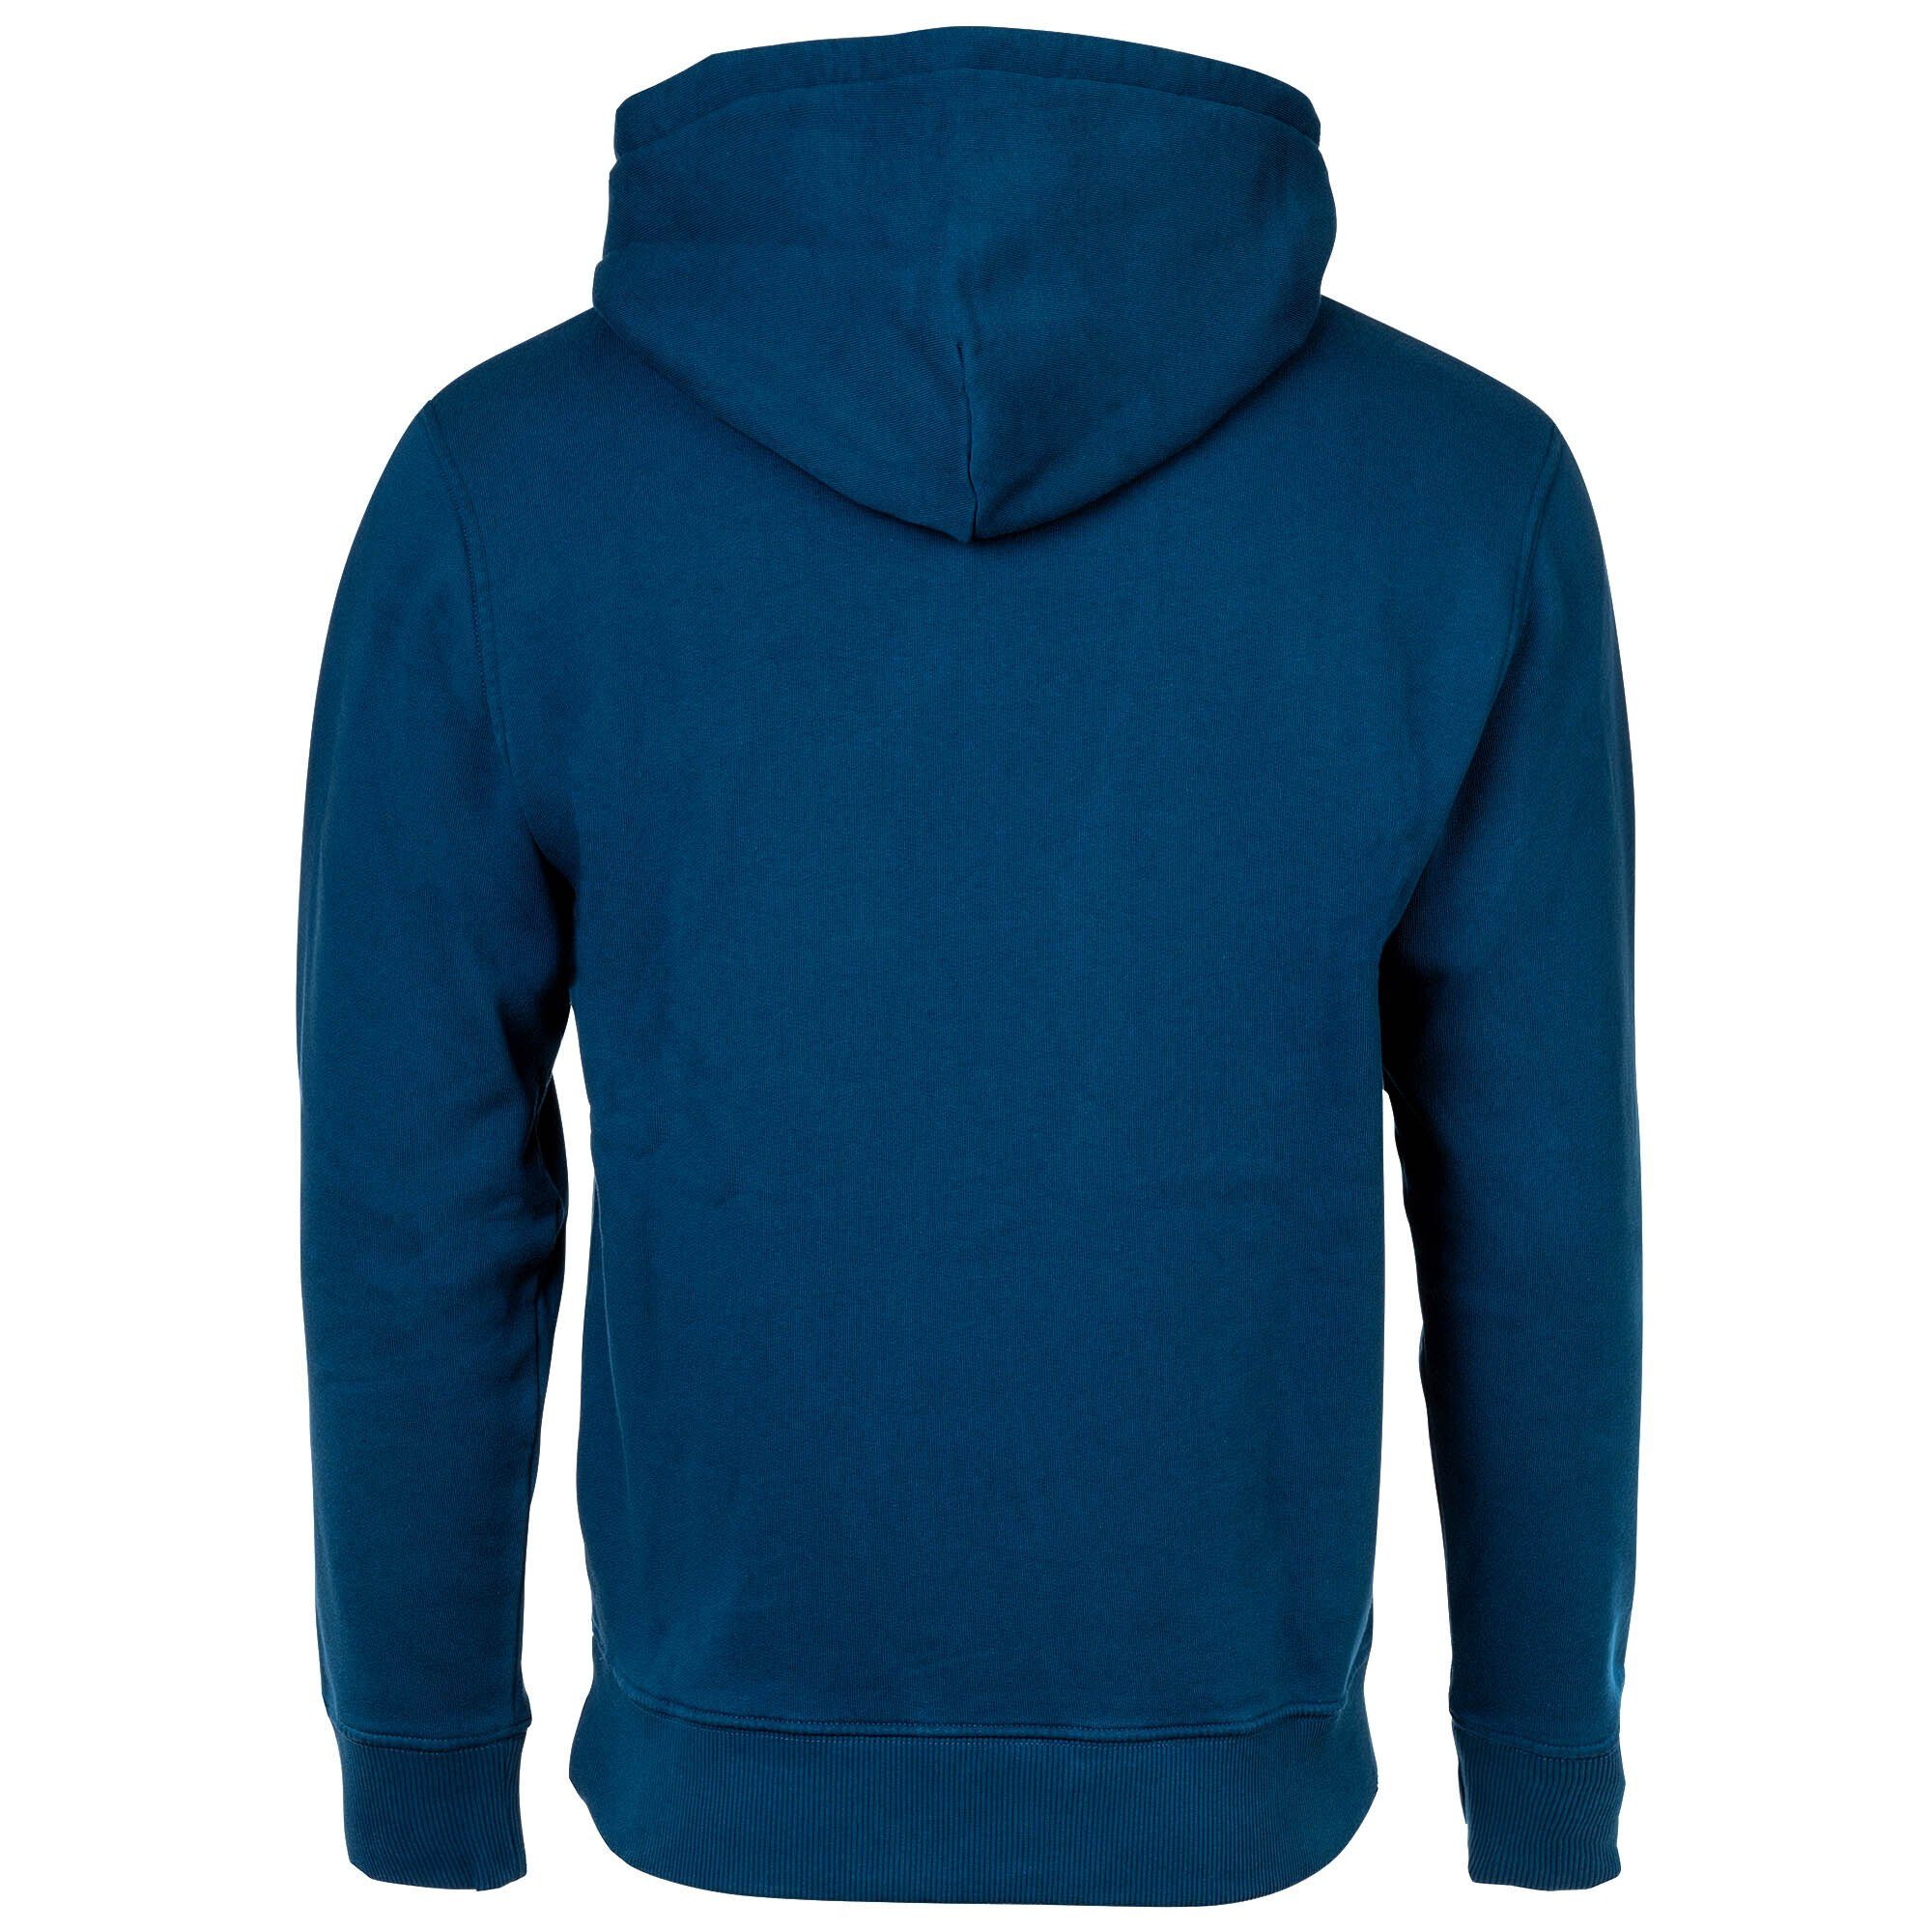 FRANKLIN AND MARSHALL Logodruck Hoodie Sweatshirt Herren - Kapuzen-Pullover, Blau